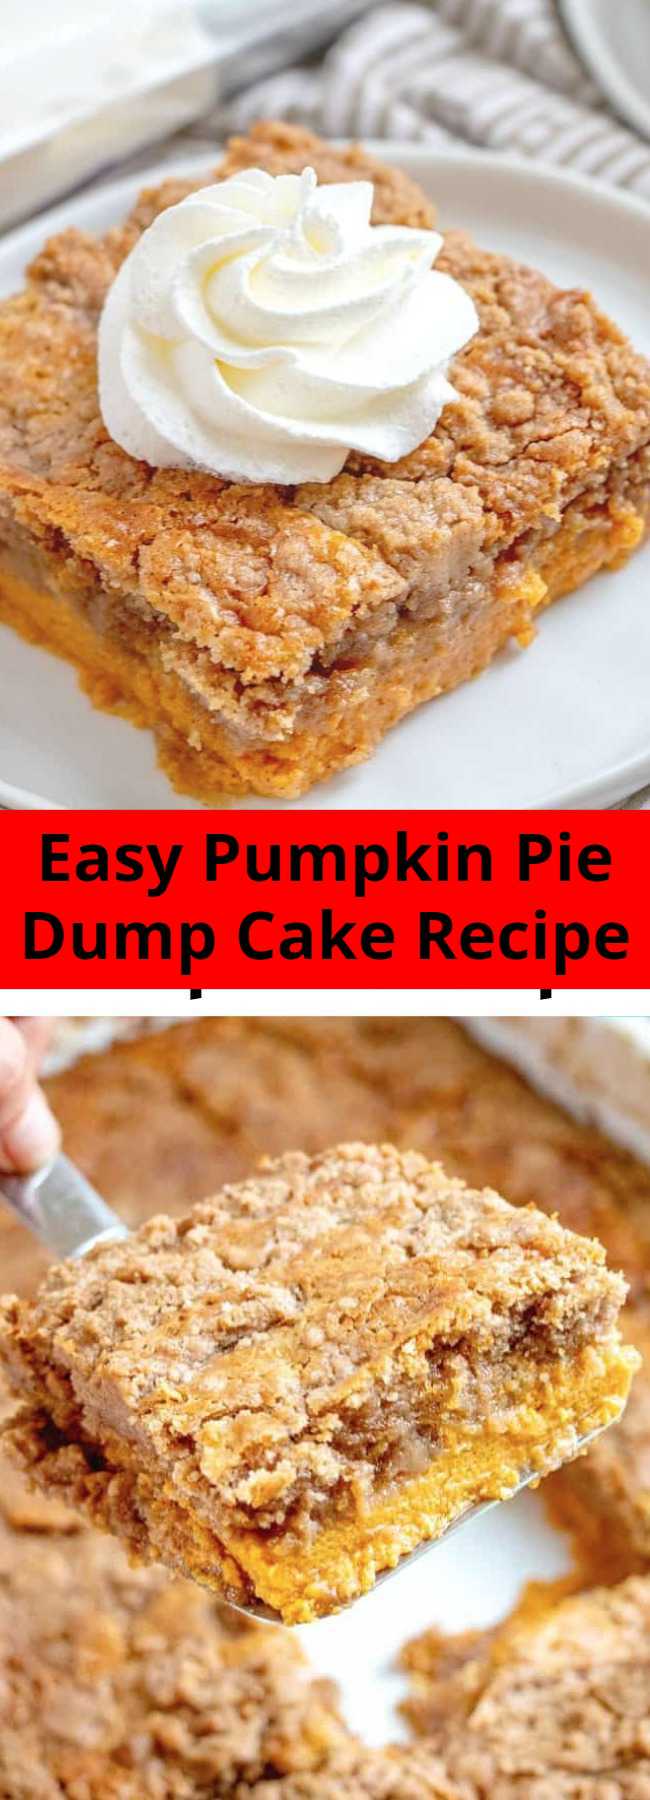 Easy Pumpkin Pie Dump Cake Recipe - Pumpkin Pie Dump Cake gets it’s name by dumping the ingredients into the baking dish. It is like a pumpkin pie and a spice cake all in one! #Pumpkin #Pie #DumpCake #Fall #Dessert